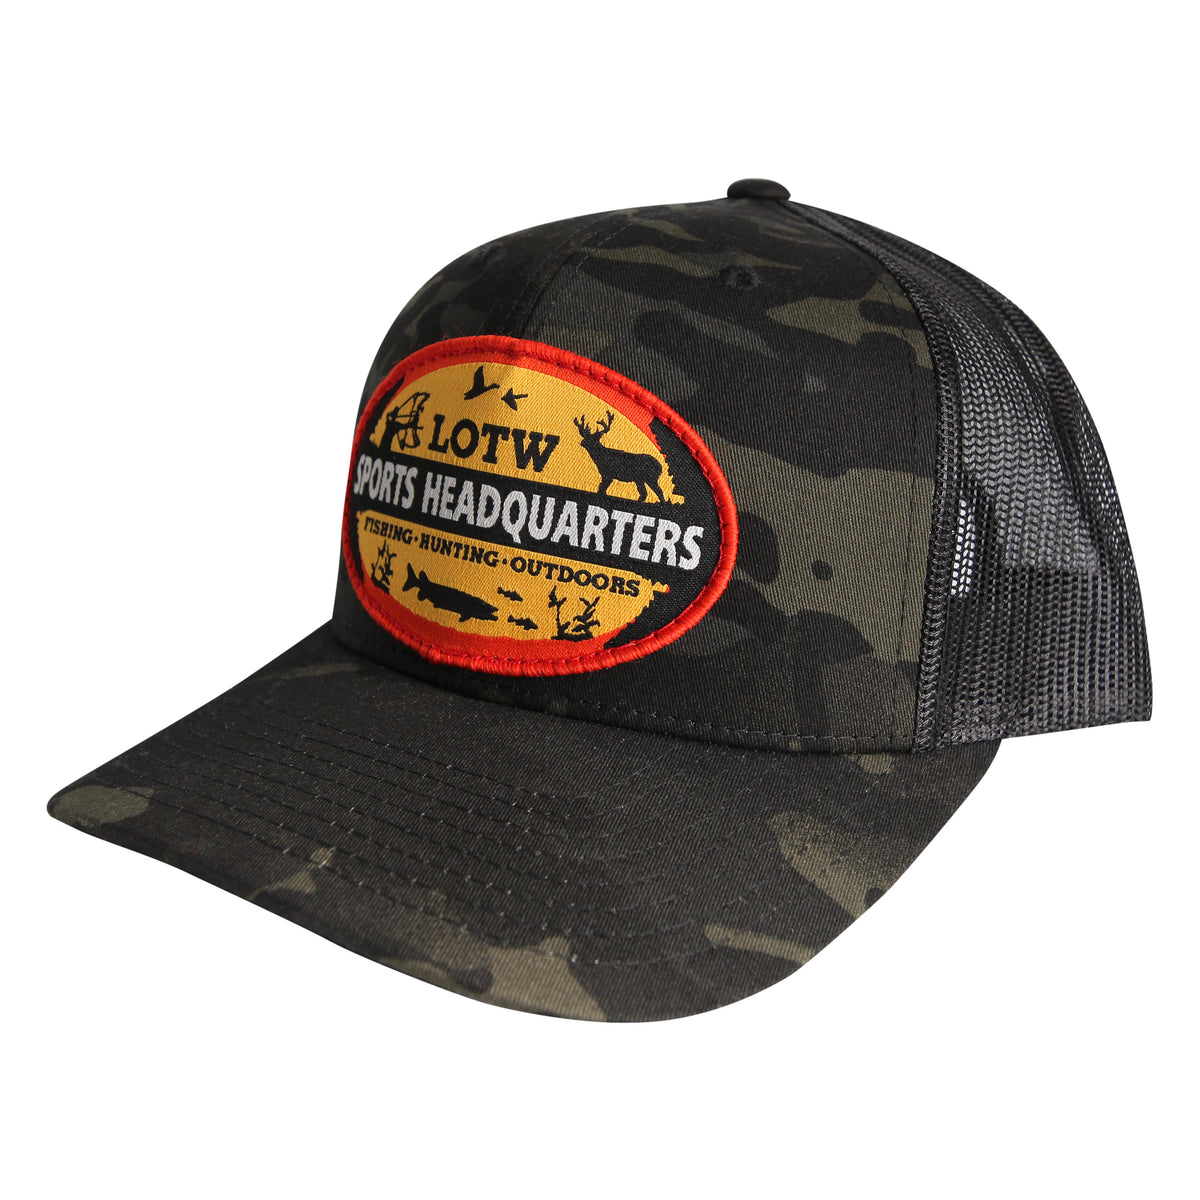 LOTW Sports Headquarters Classic Multicam Snapback Trucker Hats - Multicam Black